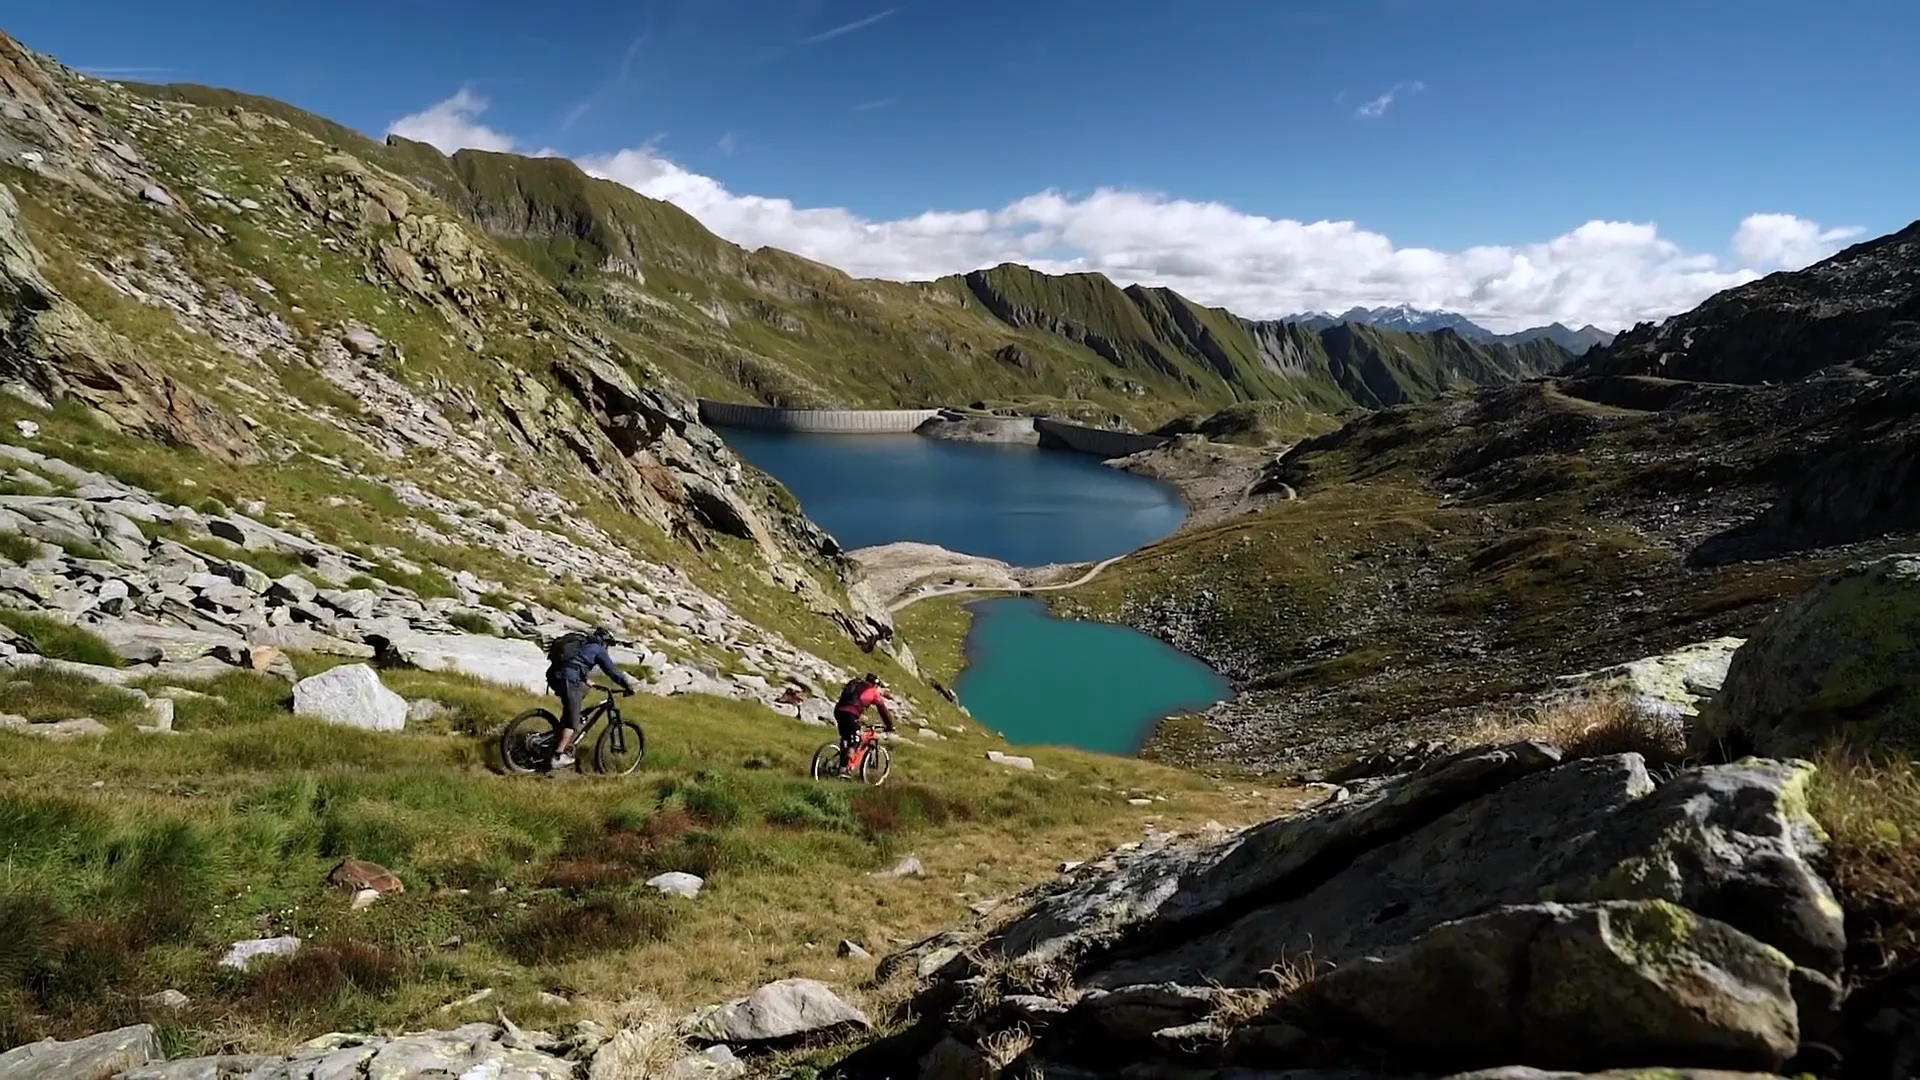 360° - Wakesurfing on Lake Maggiore on Vimeo